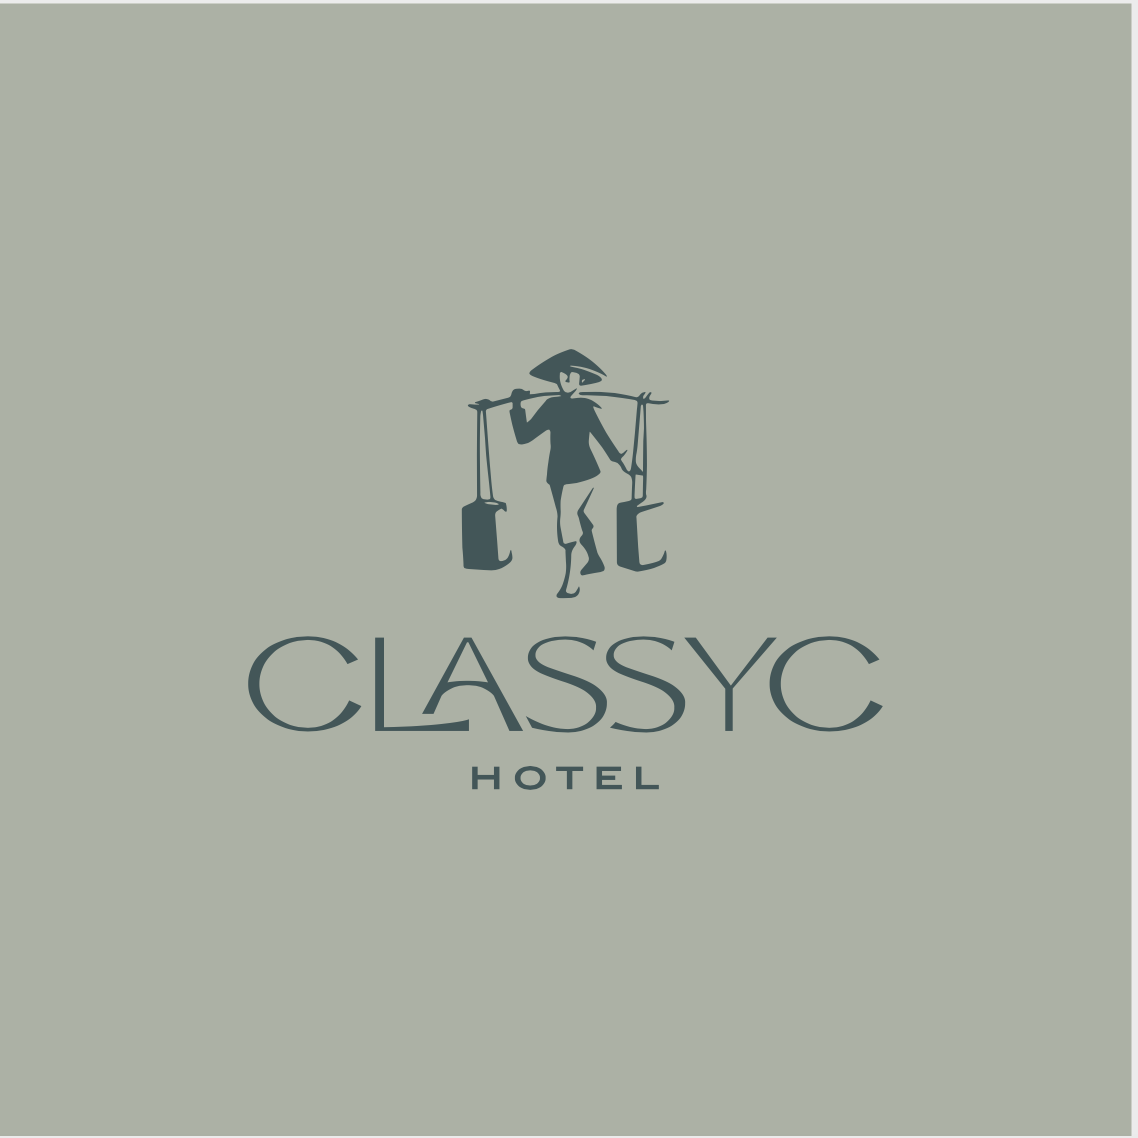 Classyc Hotel